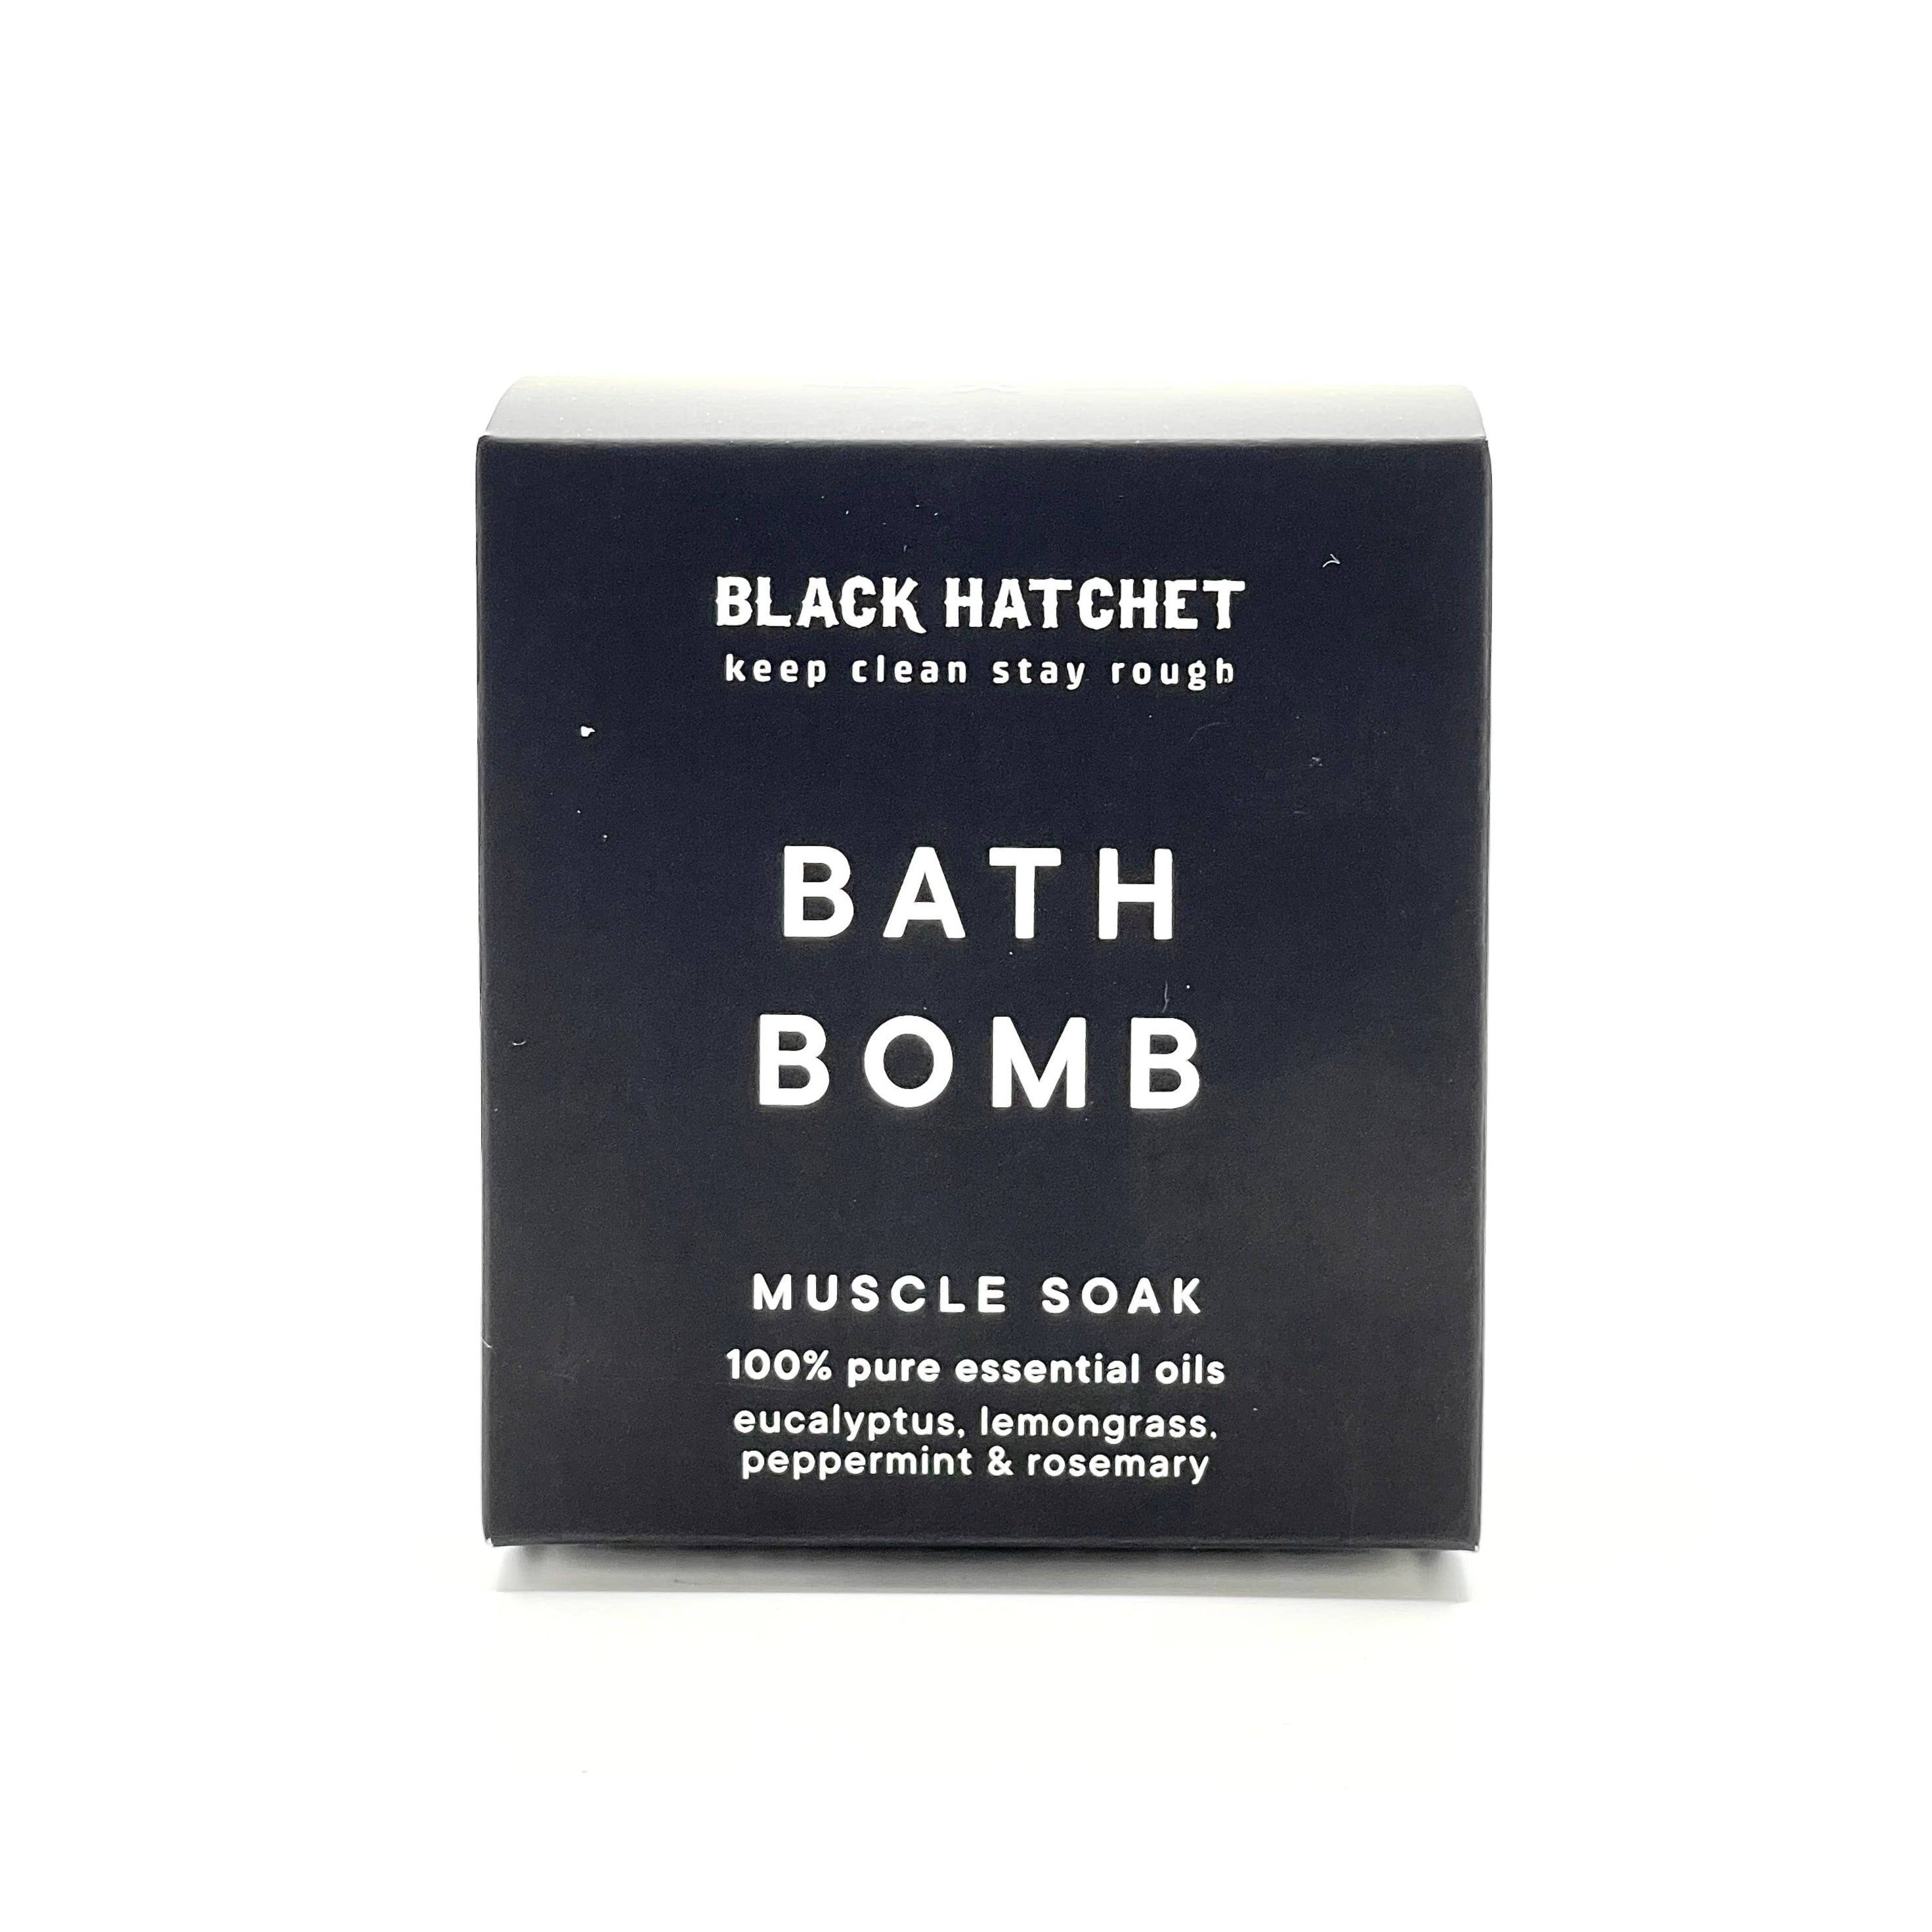 Black Hatchet Bath Bomb Muscle Soak